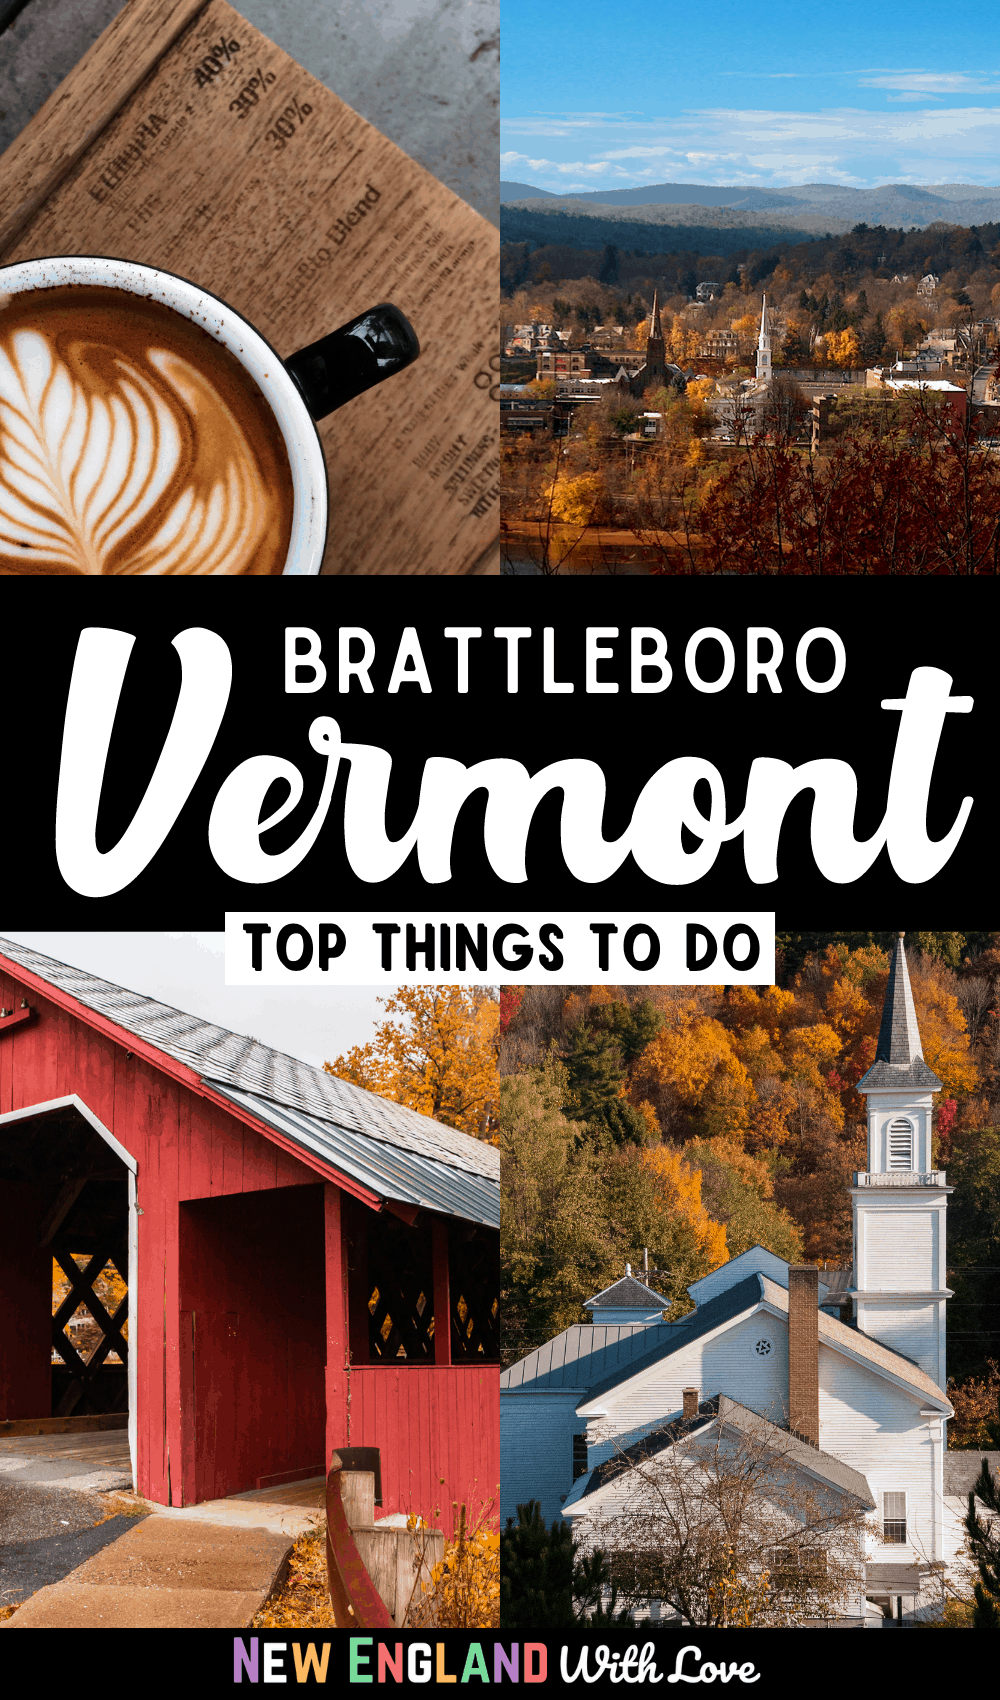 Pinterest graphic reading "BRATTLEBORO Vermonyt TOP THINGS TO DO"